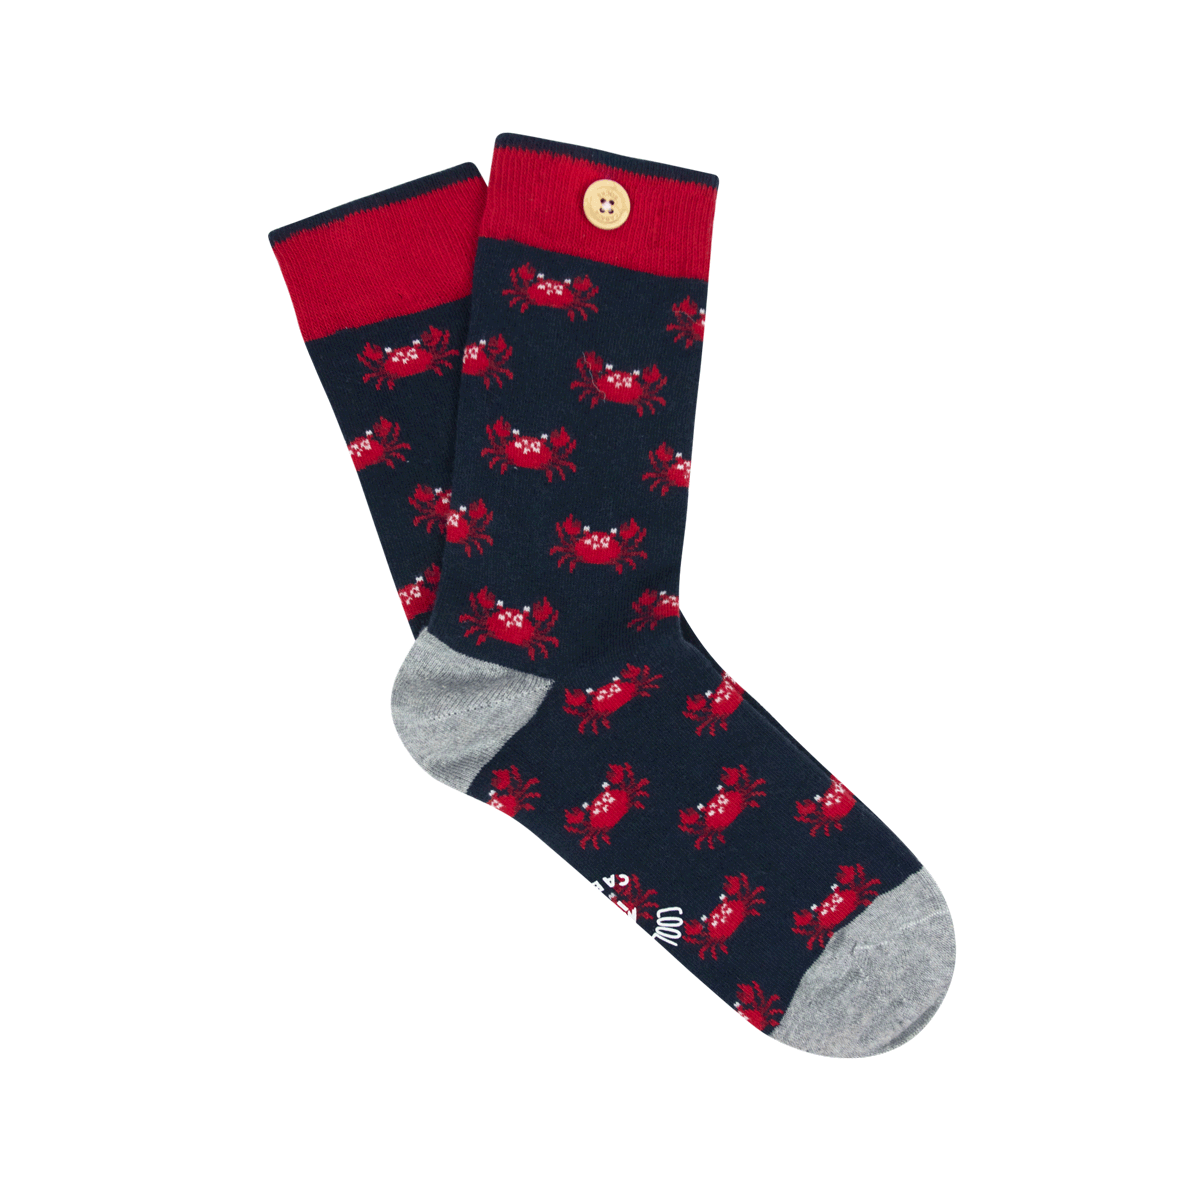 unlosable-socks-wood-button-men-41-46-socks20-loui-sok